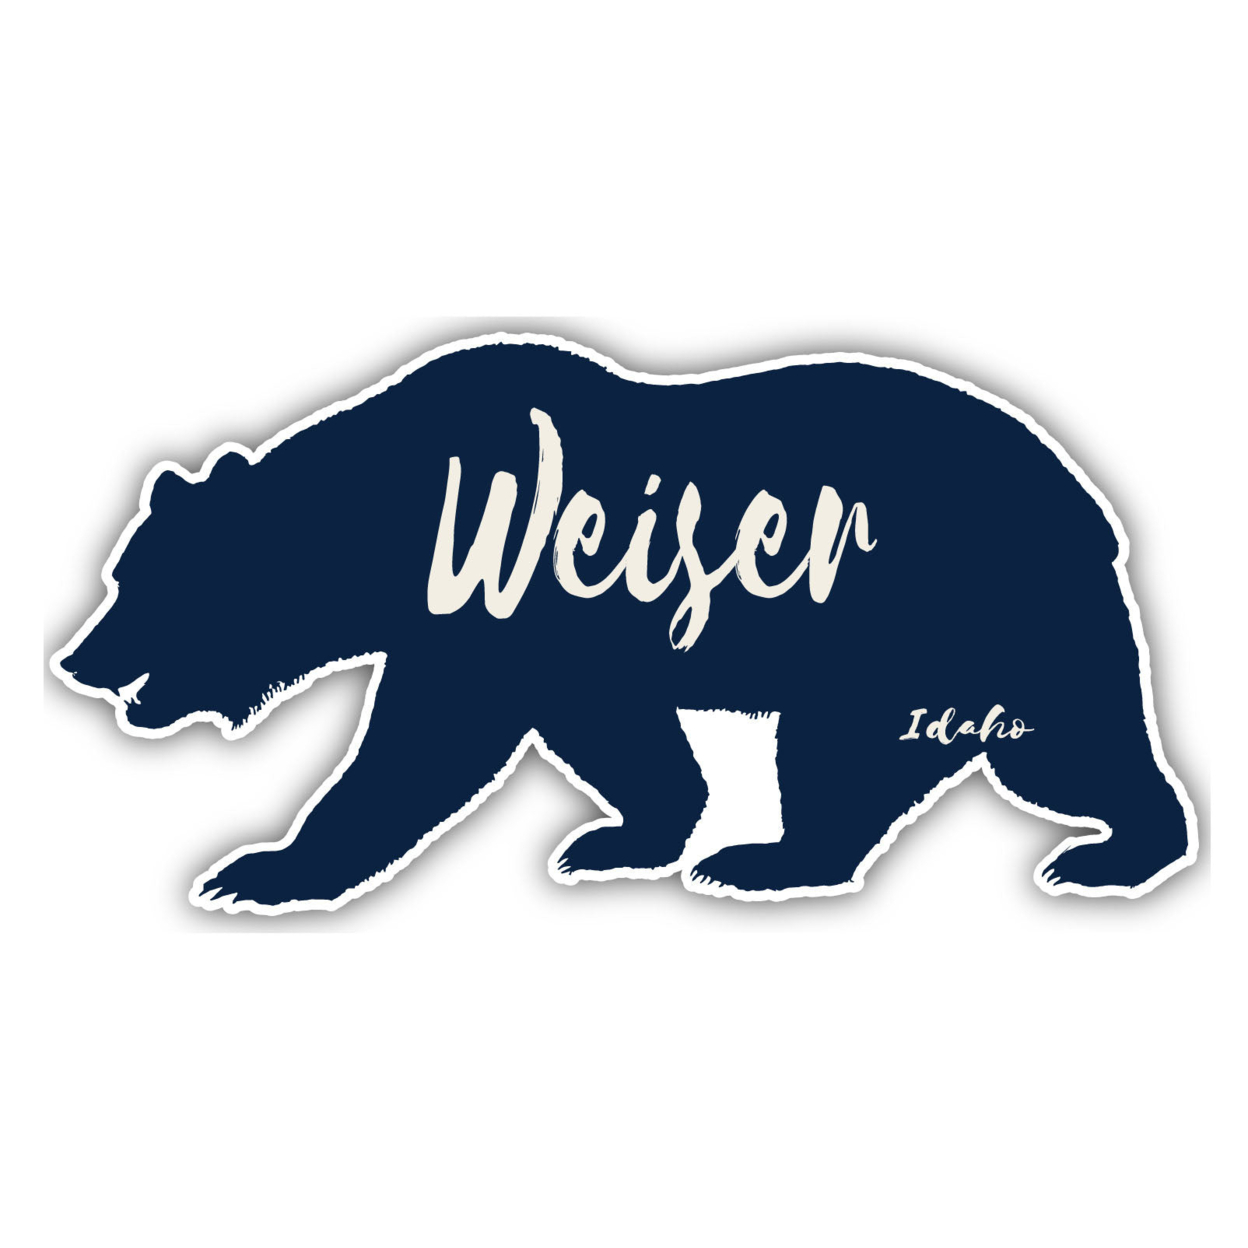 Weiser Idaho Souvenir Decorative Stickers (Choose Theme And Size) - Single Unit, 4-Inch, Bear